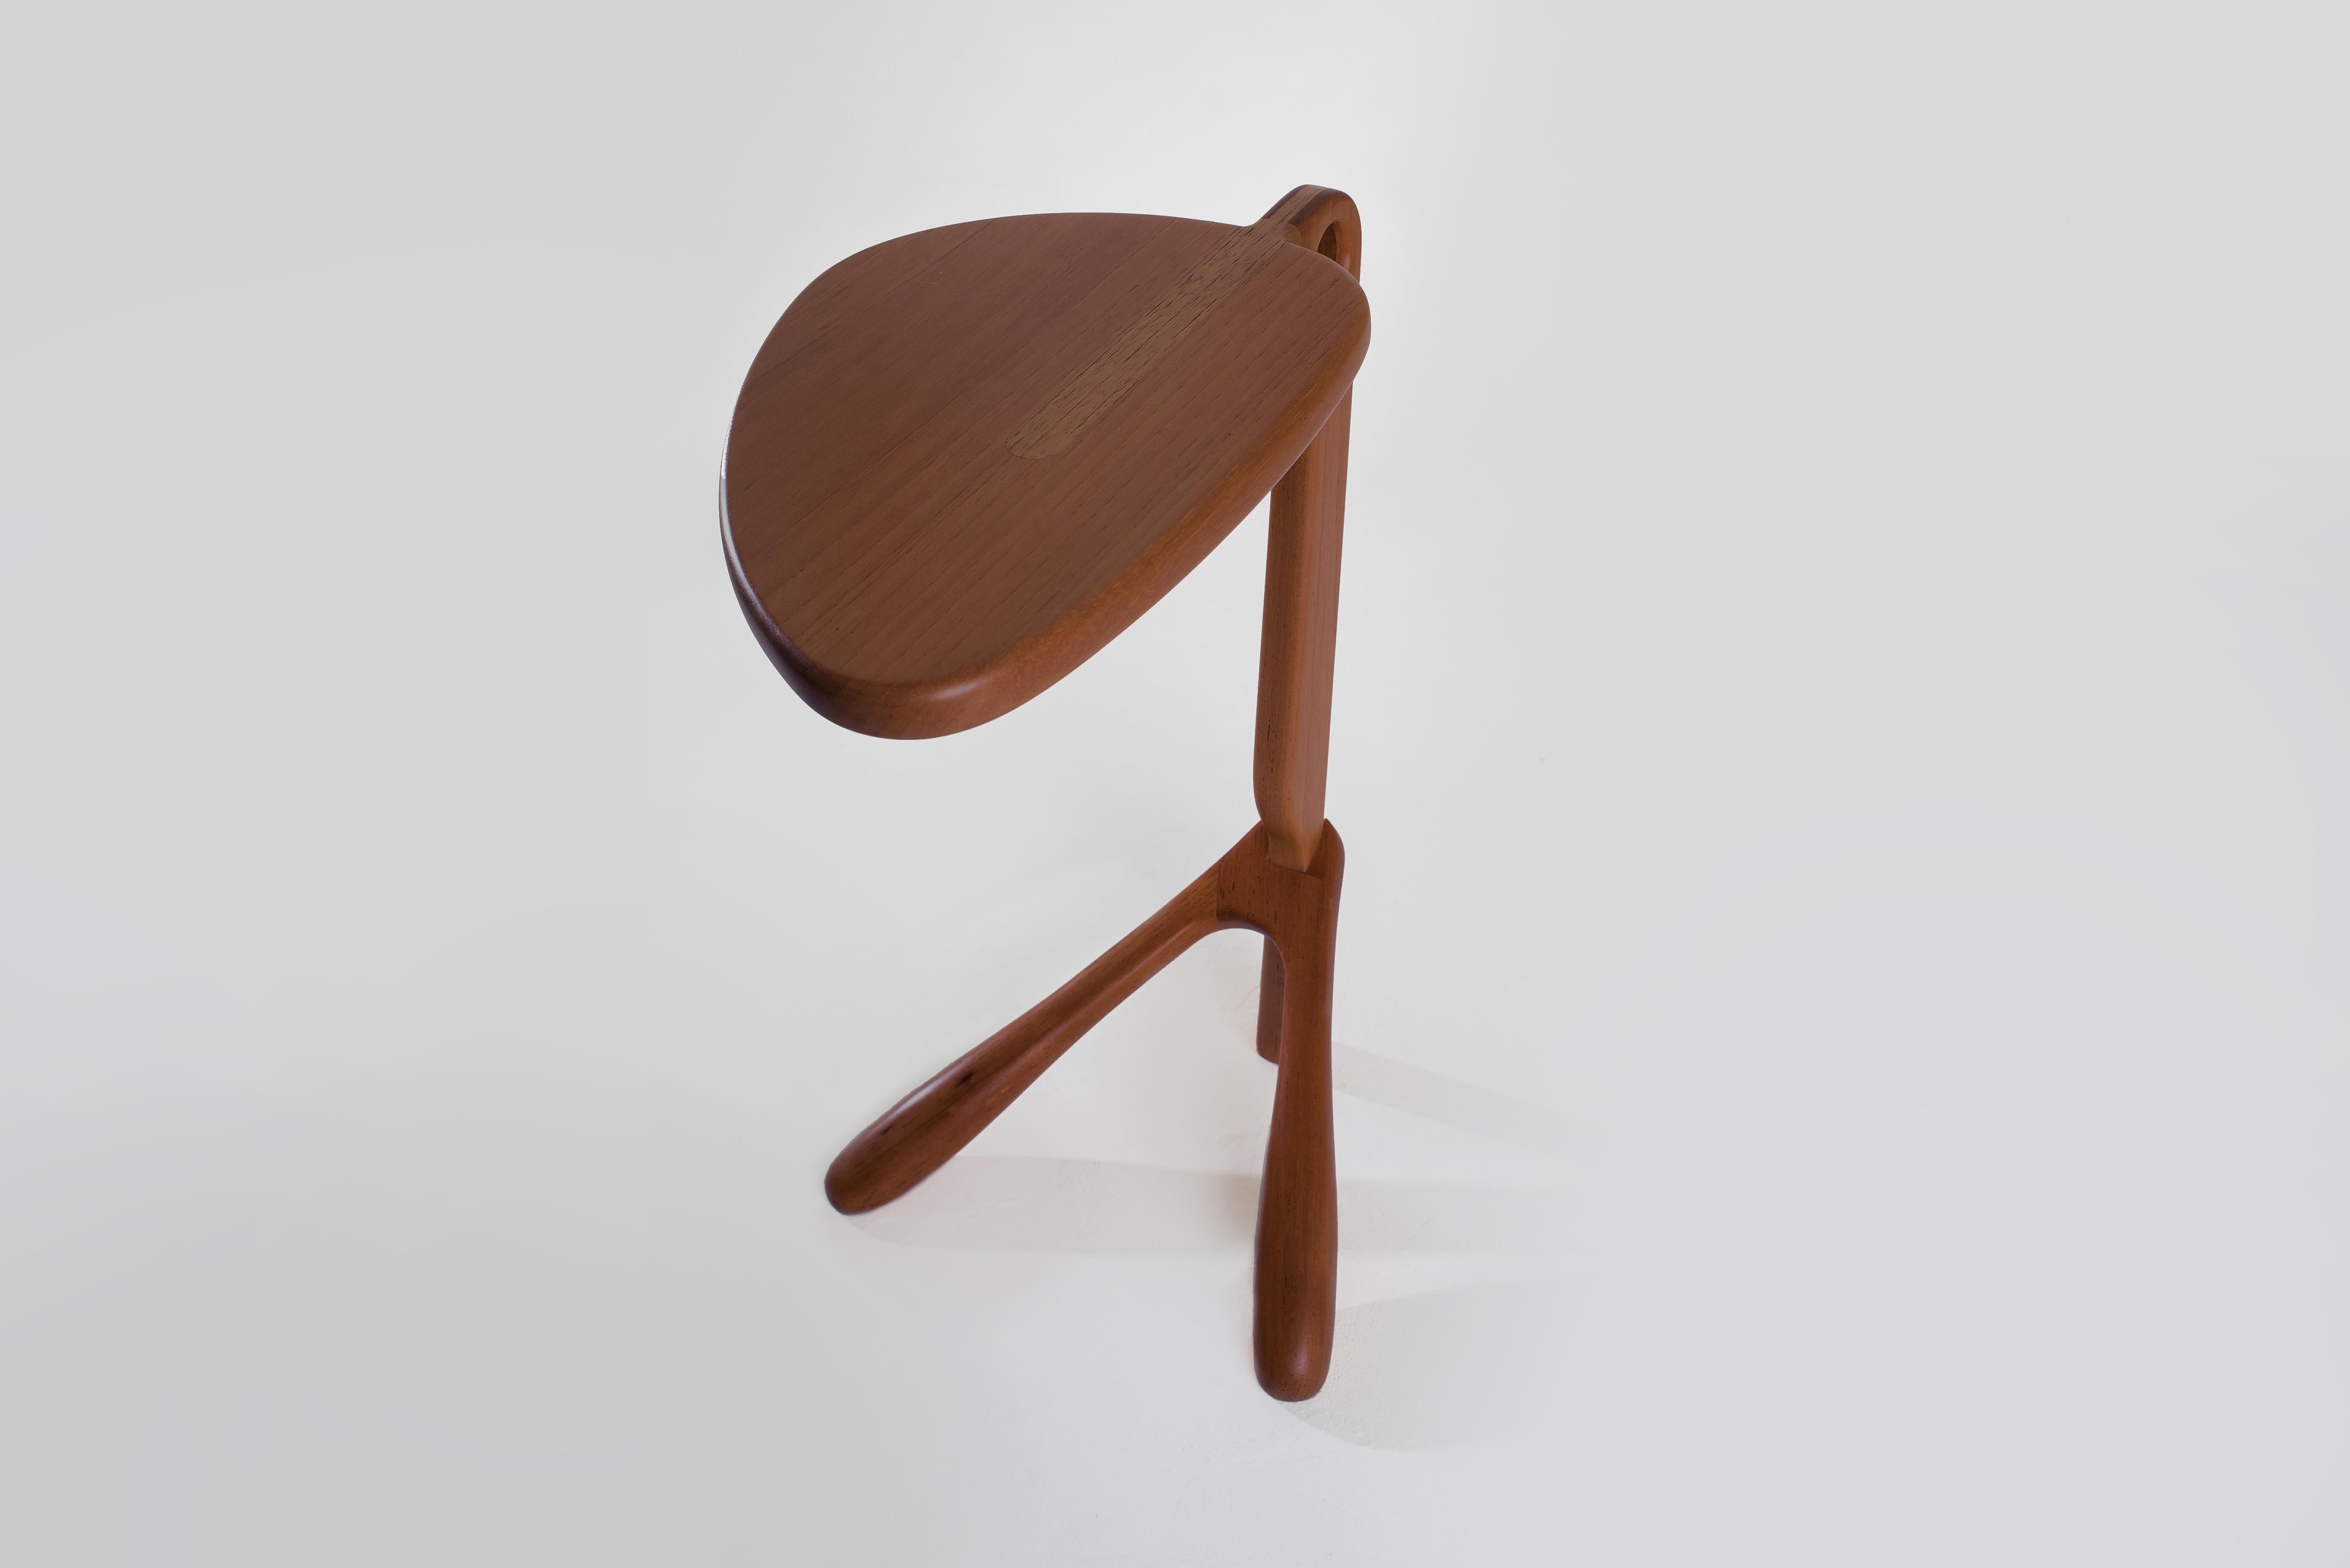 Organic Modern Organic Form Side Table - Broto, MEDIAN size Dark Brown Wood  For Sale